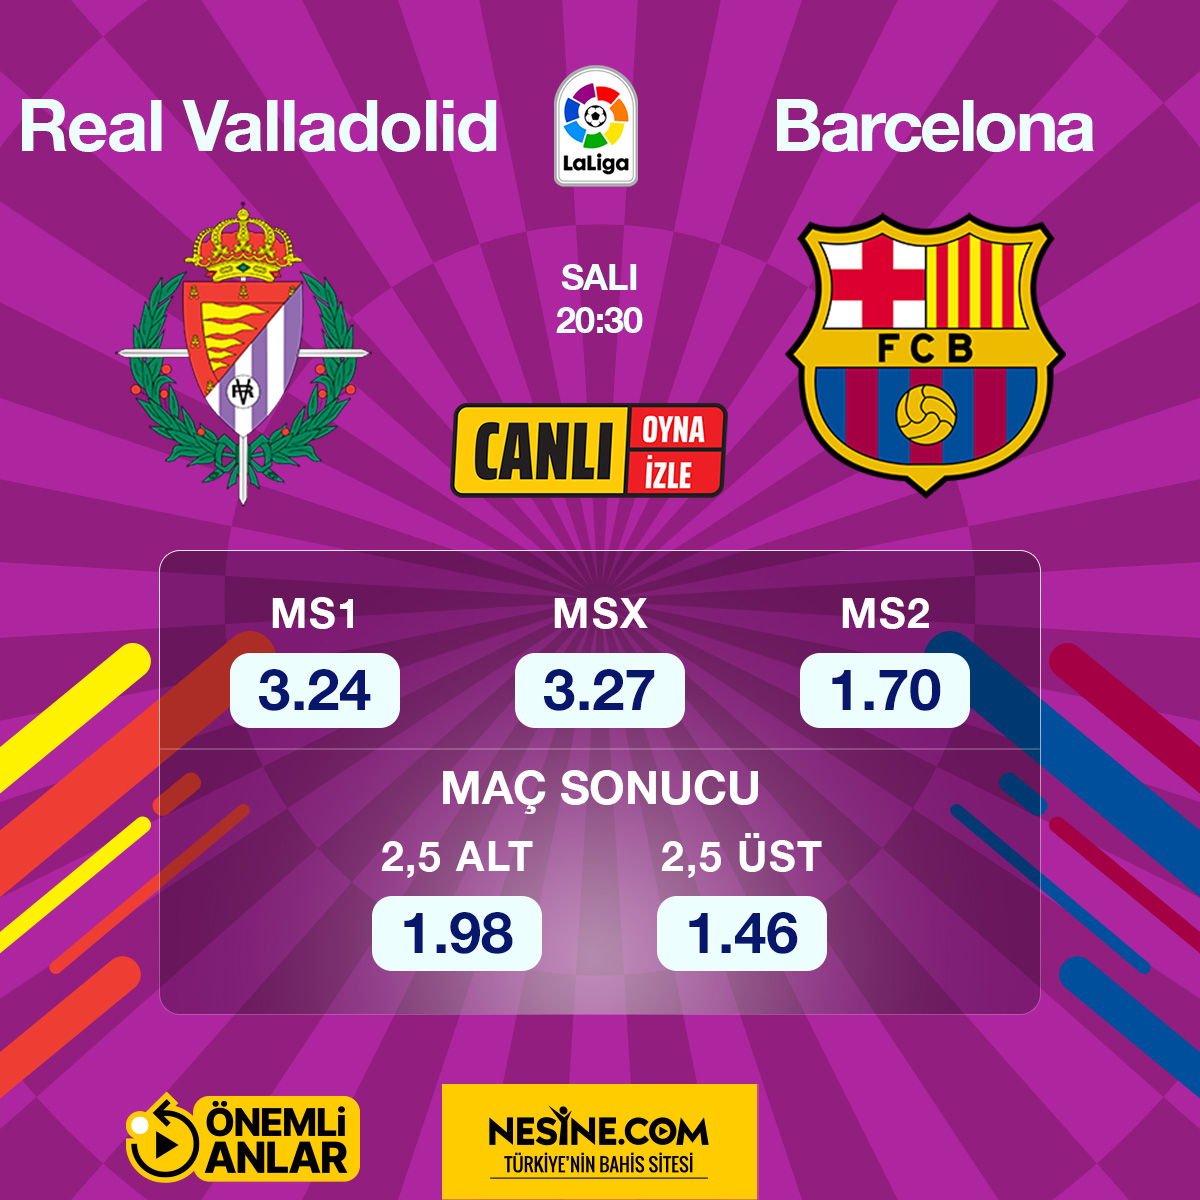 LaLiga'da şampiyon Barcelona, Real Valladolid deplasmanında! Real Valladolid - Barcelona mücadelesi CANLI OYNA - CANLI İZLE servisleriyle ift.tt/pSie9Yo! Hemen Oyna - Canlı İzle 👉 bit.ly/431LP1F